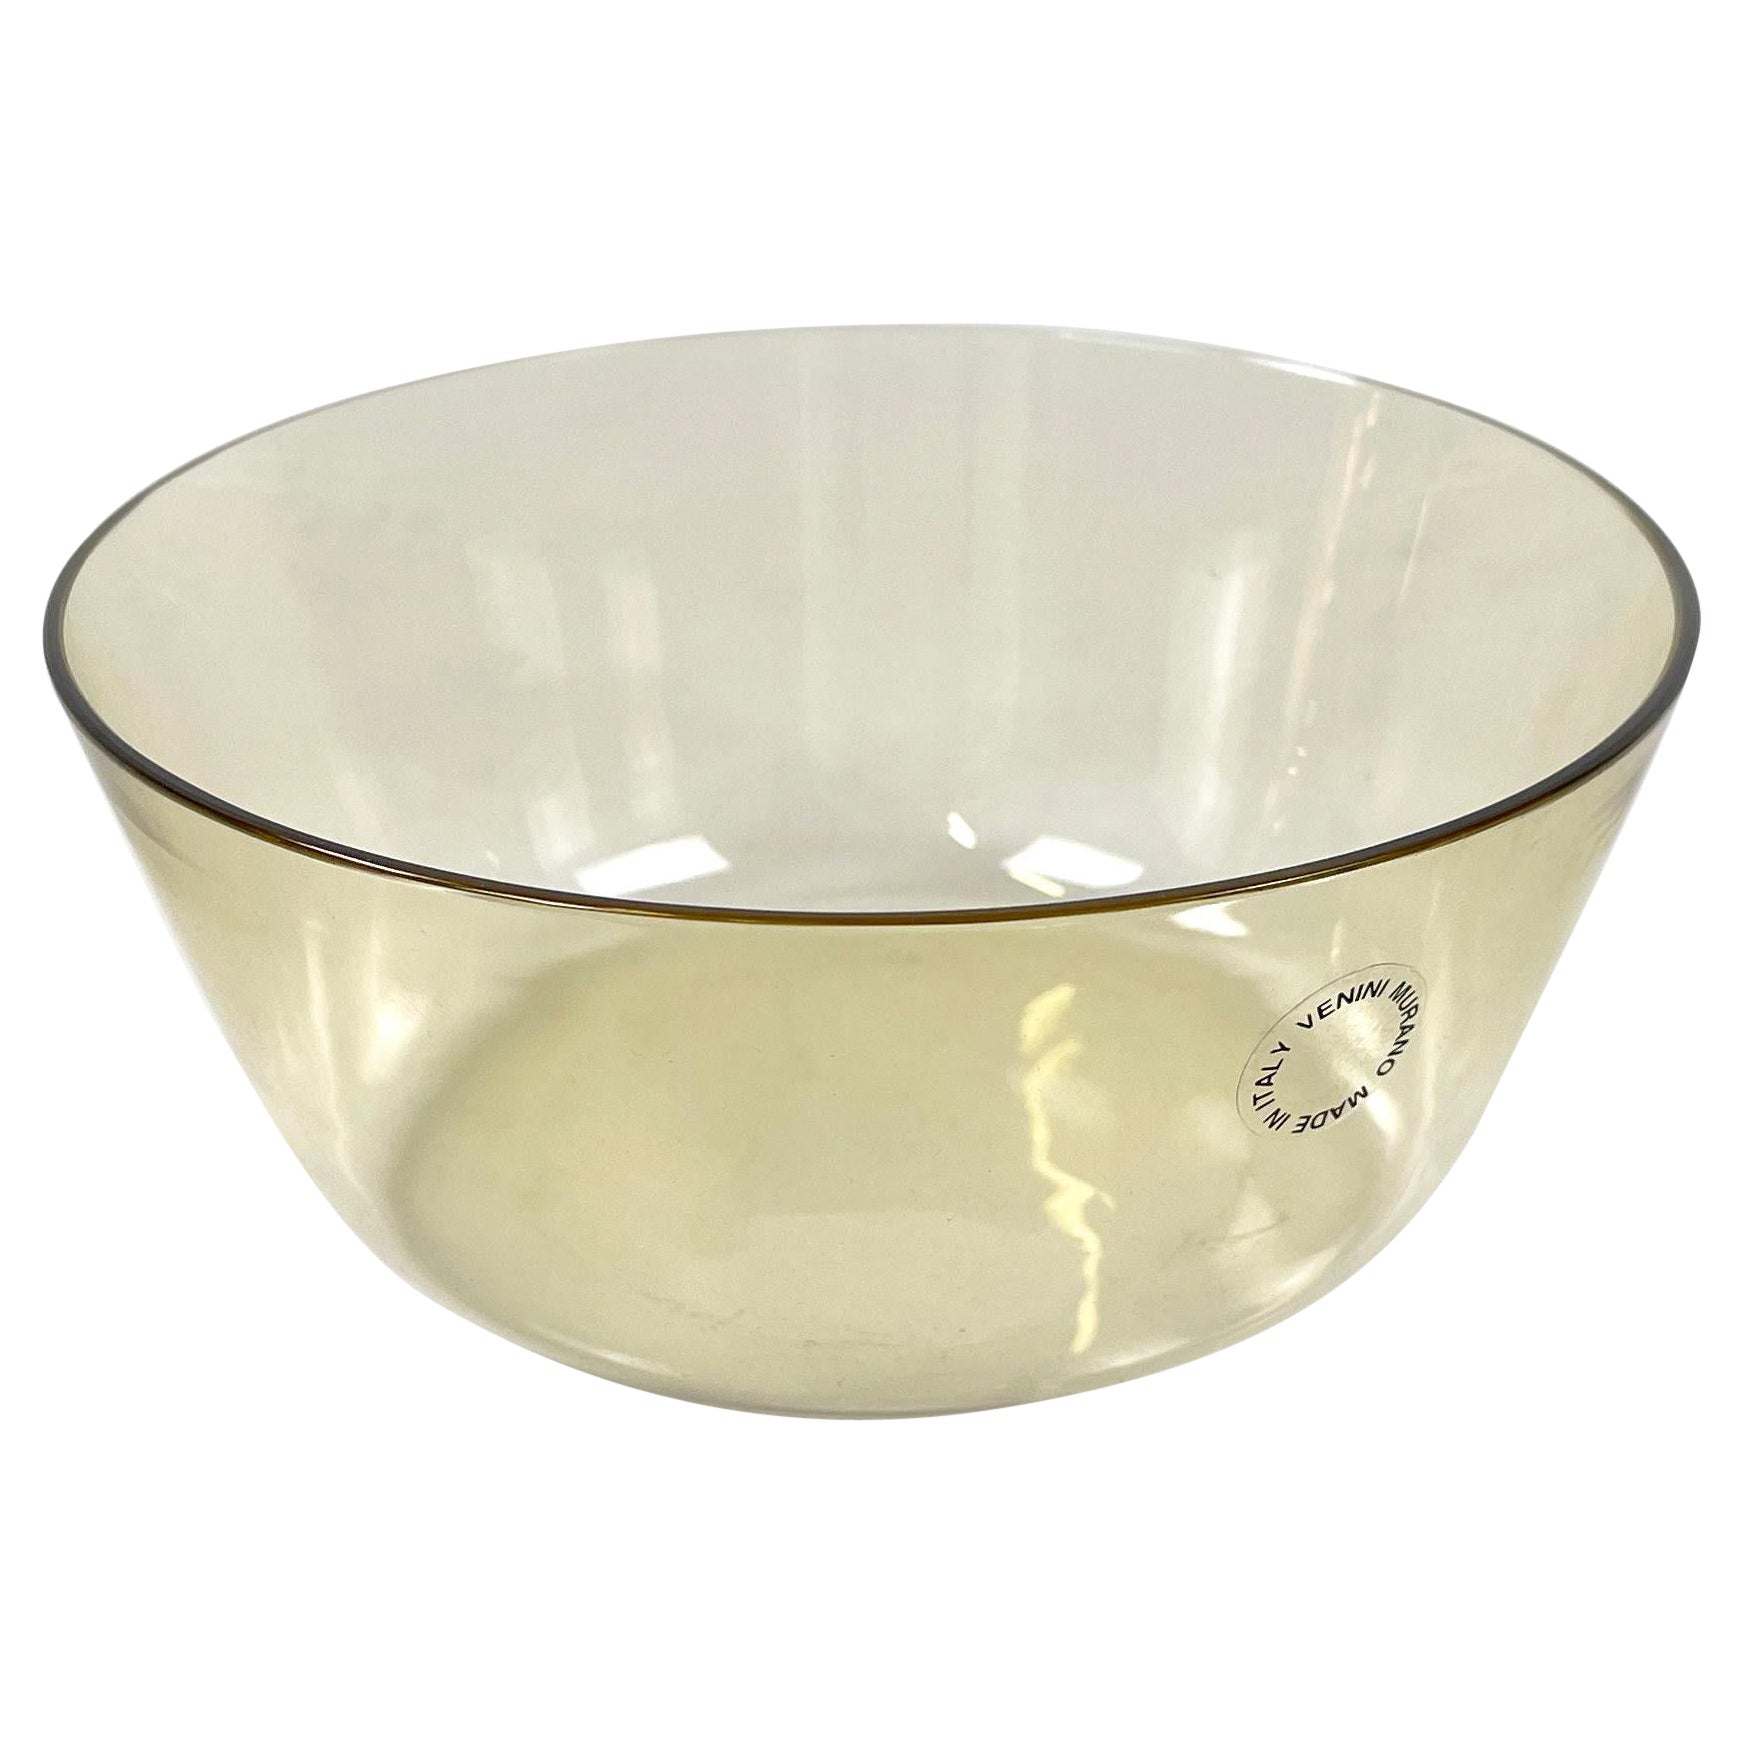 Italian modern Decorative bowl in transparent yellow Murano glass by Venini 1990